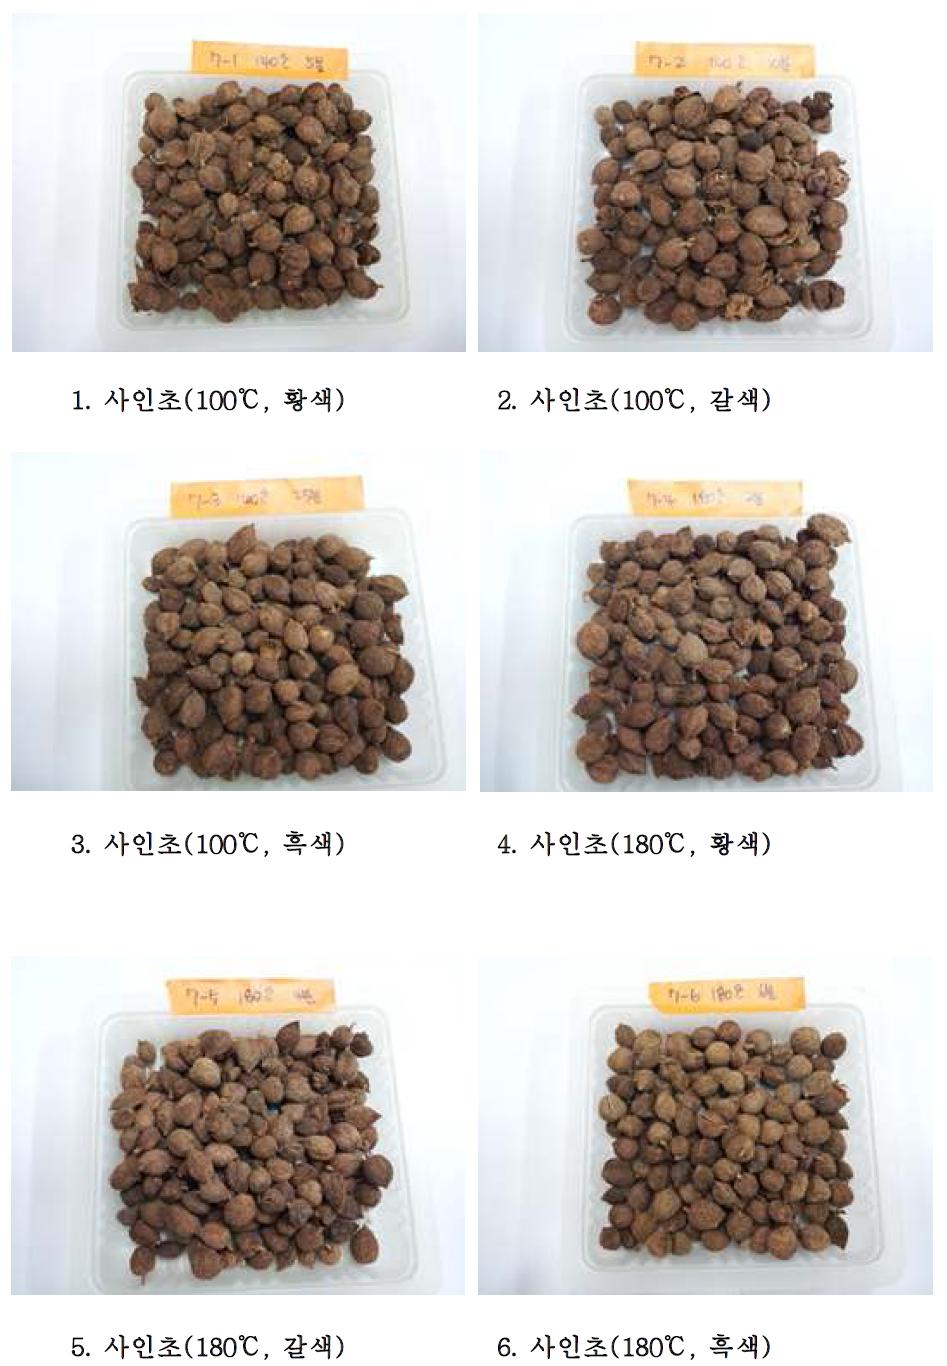 Roasted Amomum Fruit From the processing method.